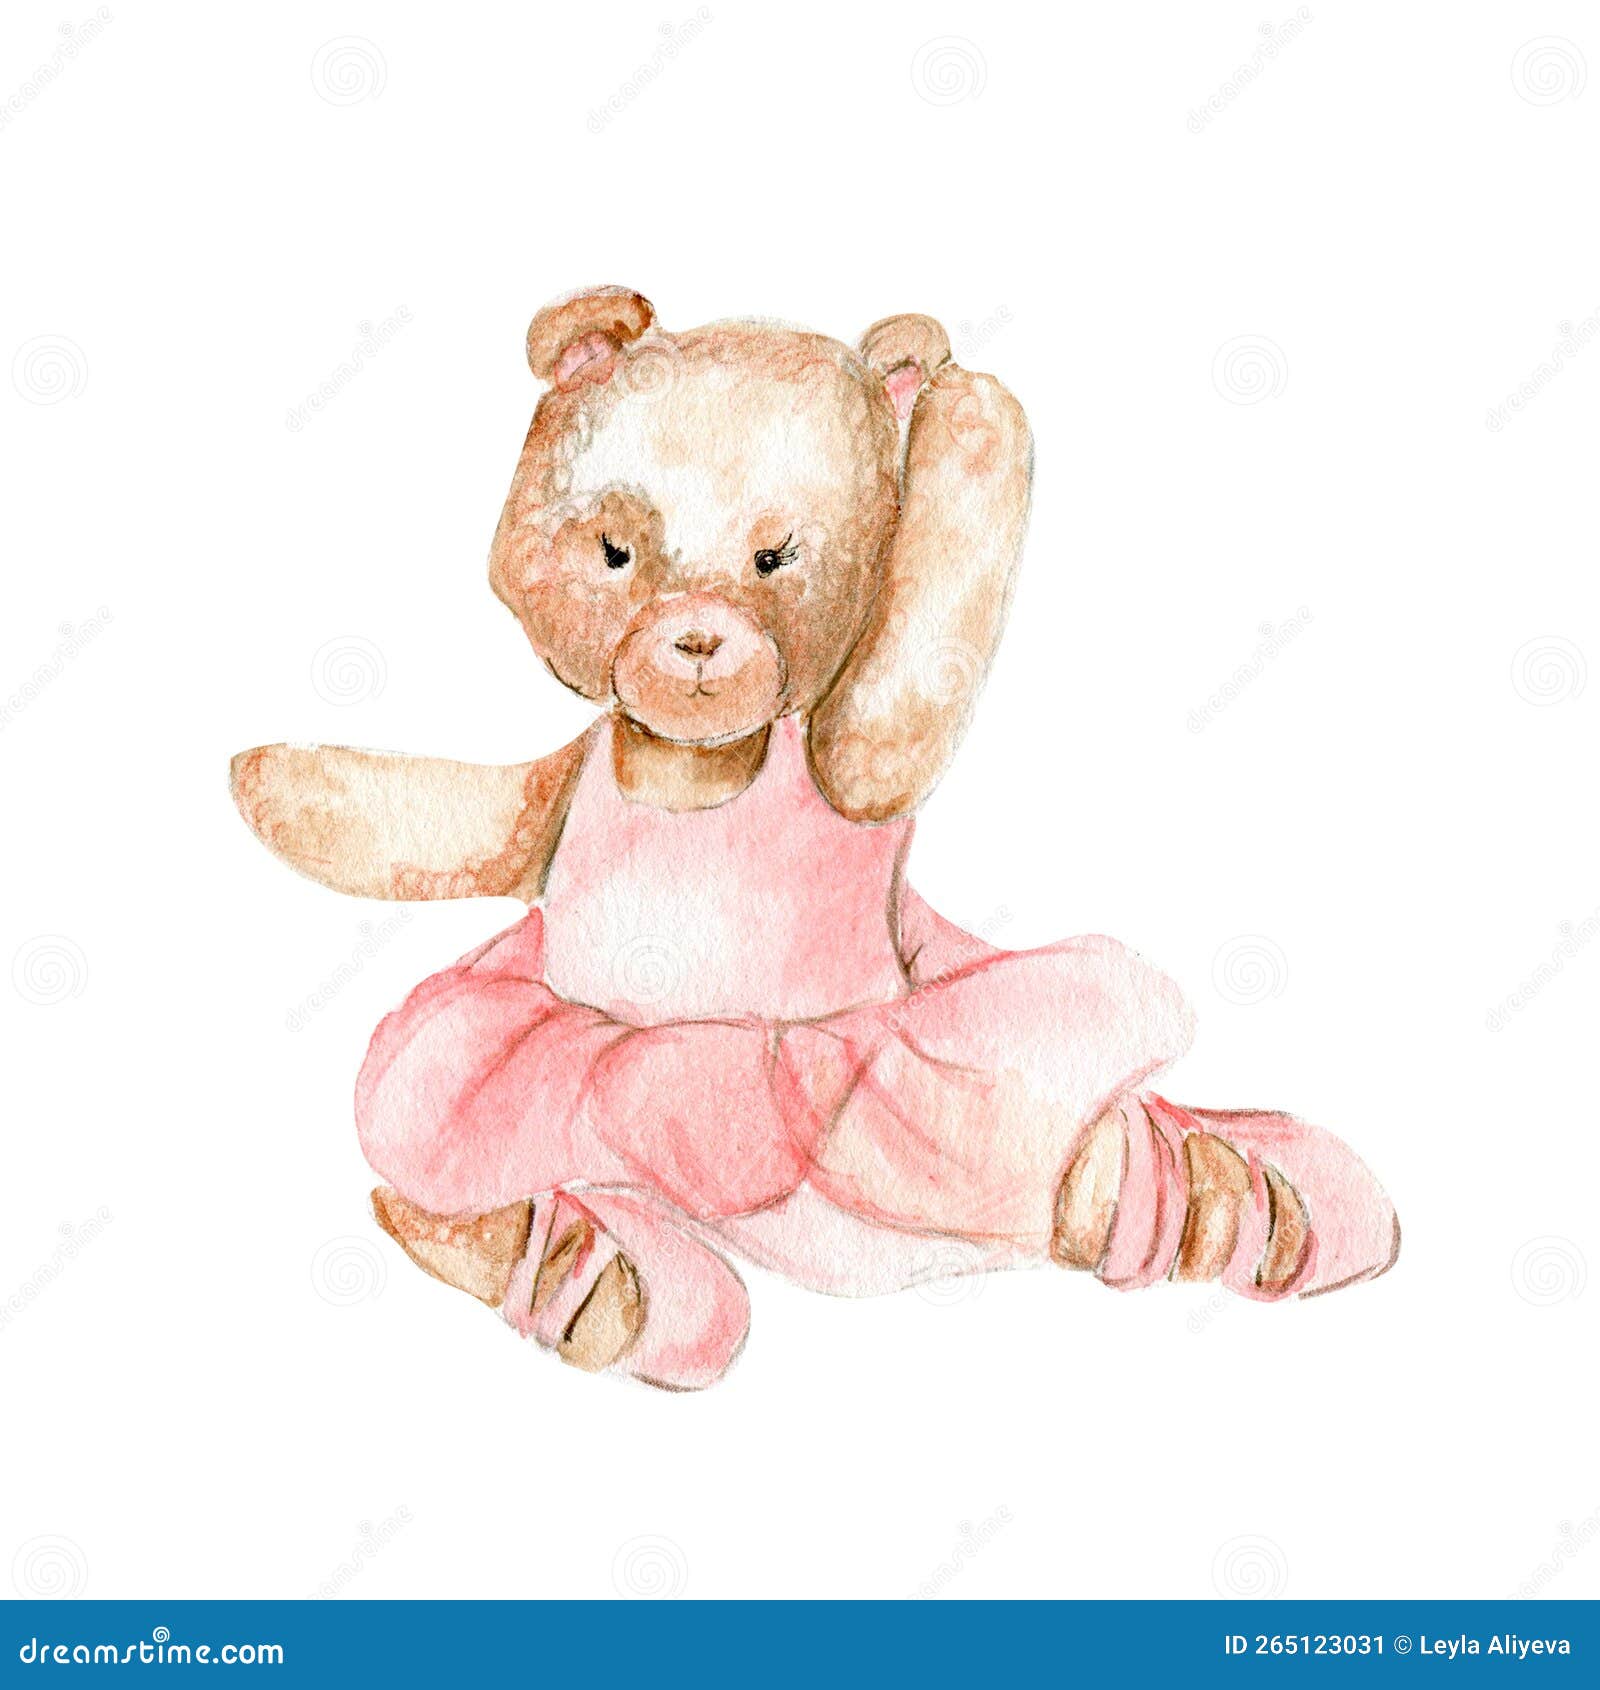 dancing bear pink dress